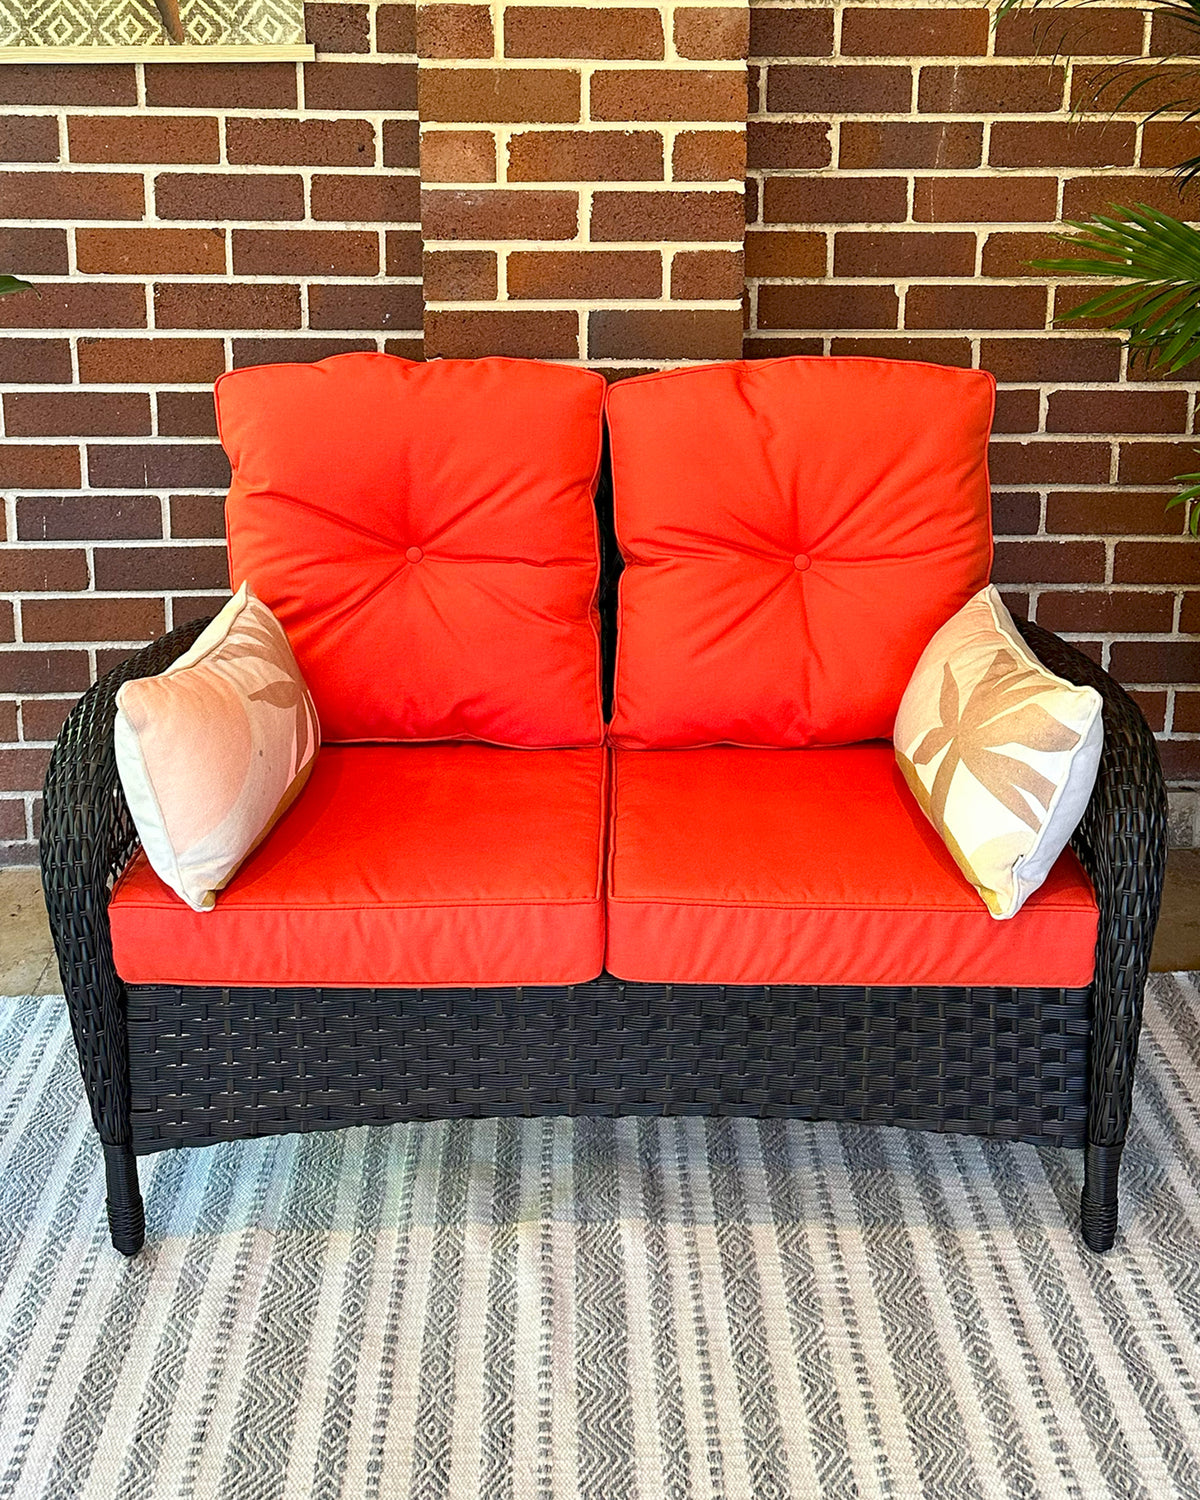 Harlie & Stone Outdoor Love seat 2 Seat Couch Wicker Loveseat - Orange Cushion